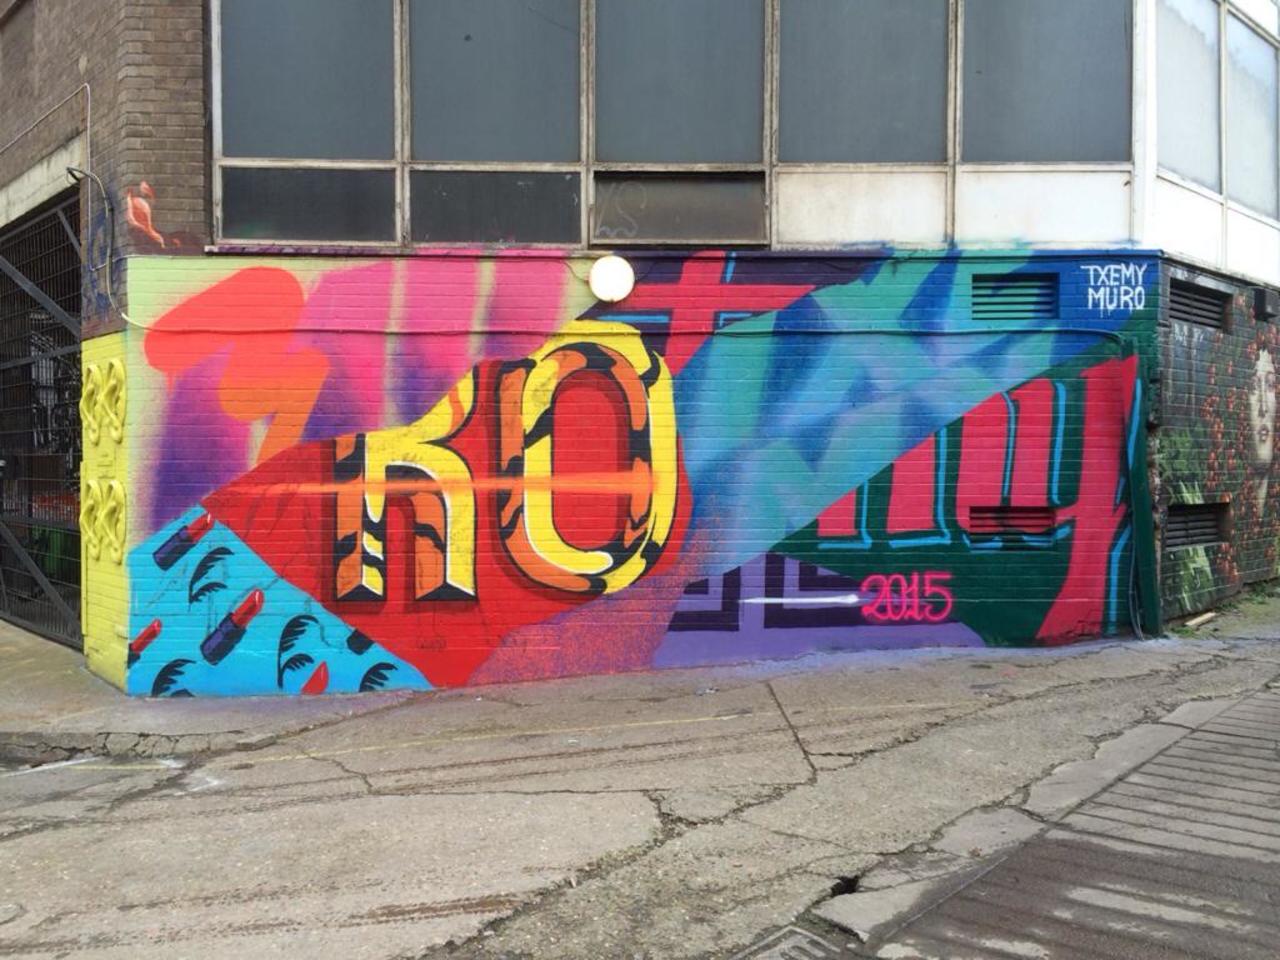 New work by Mur0ne and Txemy in London #wallsproject
Via @globalstreetart 
#streetart #urbanart #mural #art #graffiti http://t.co/n80arMmVcz